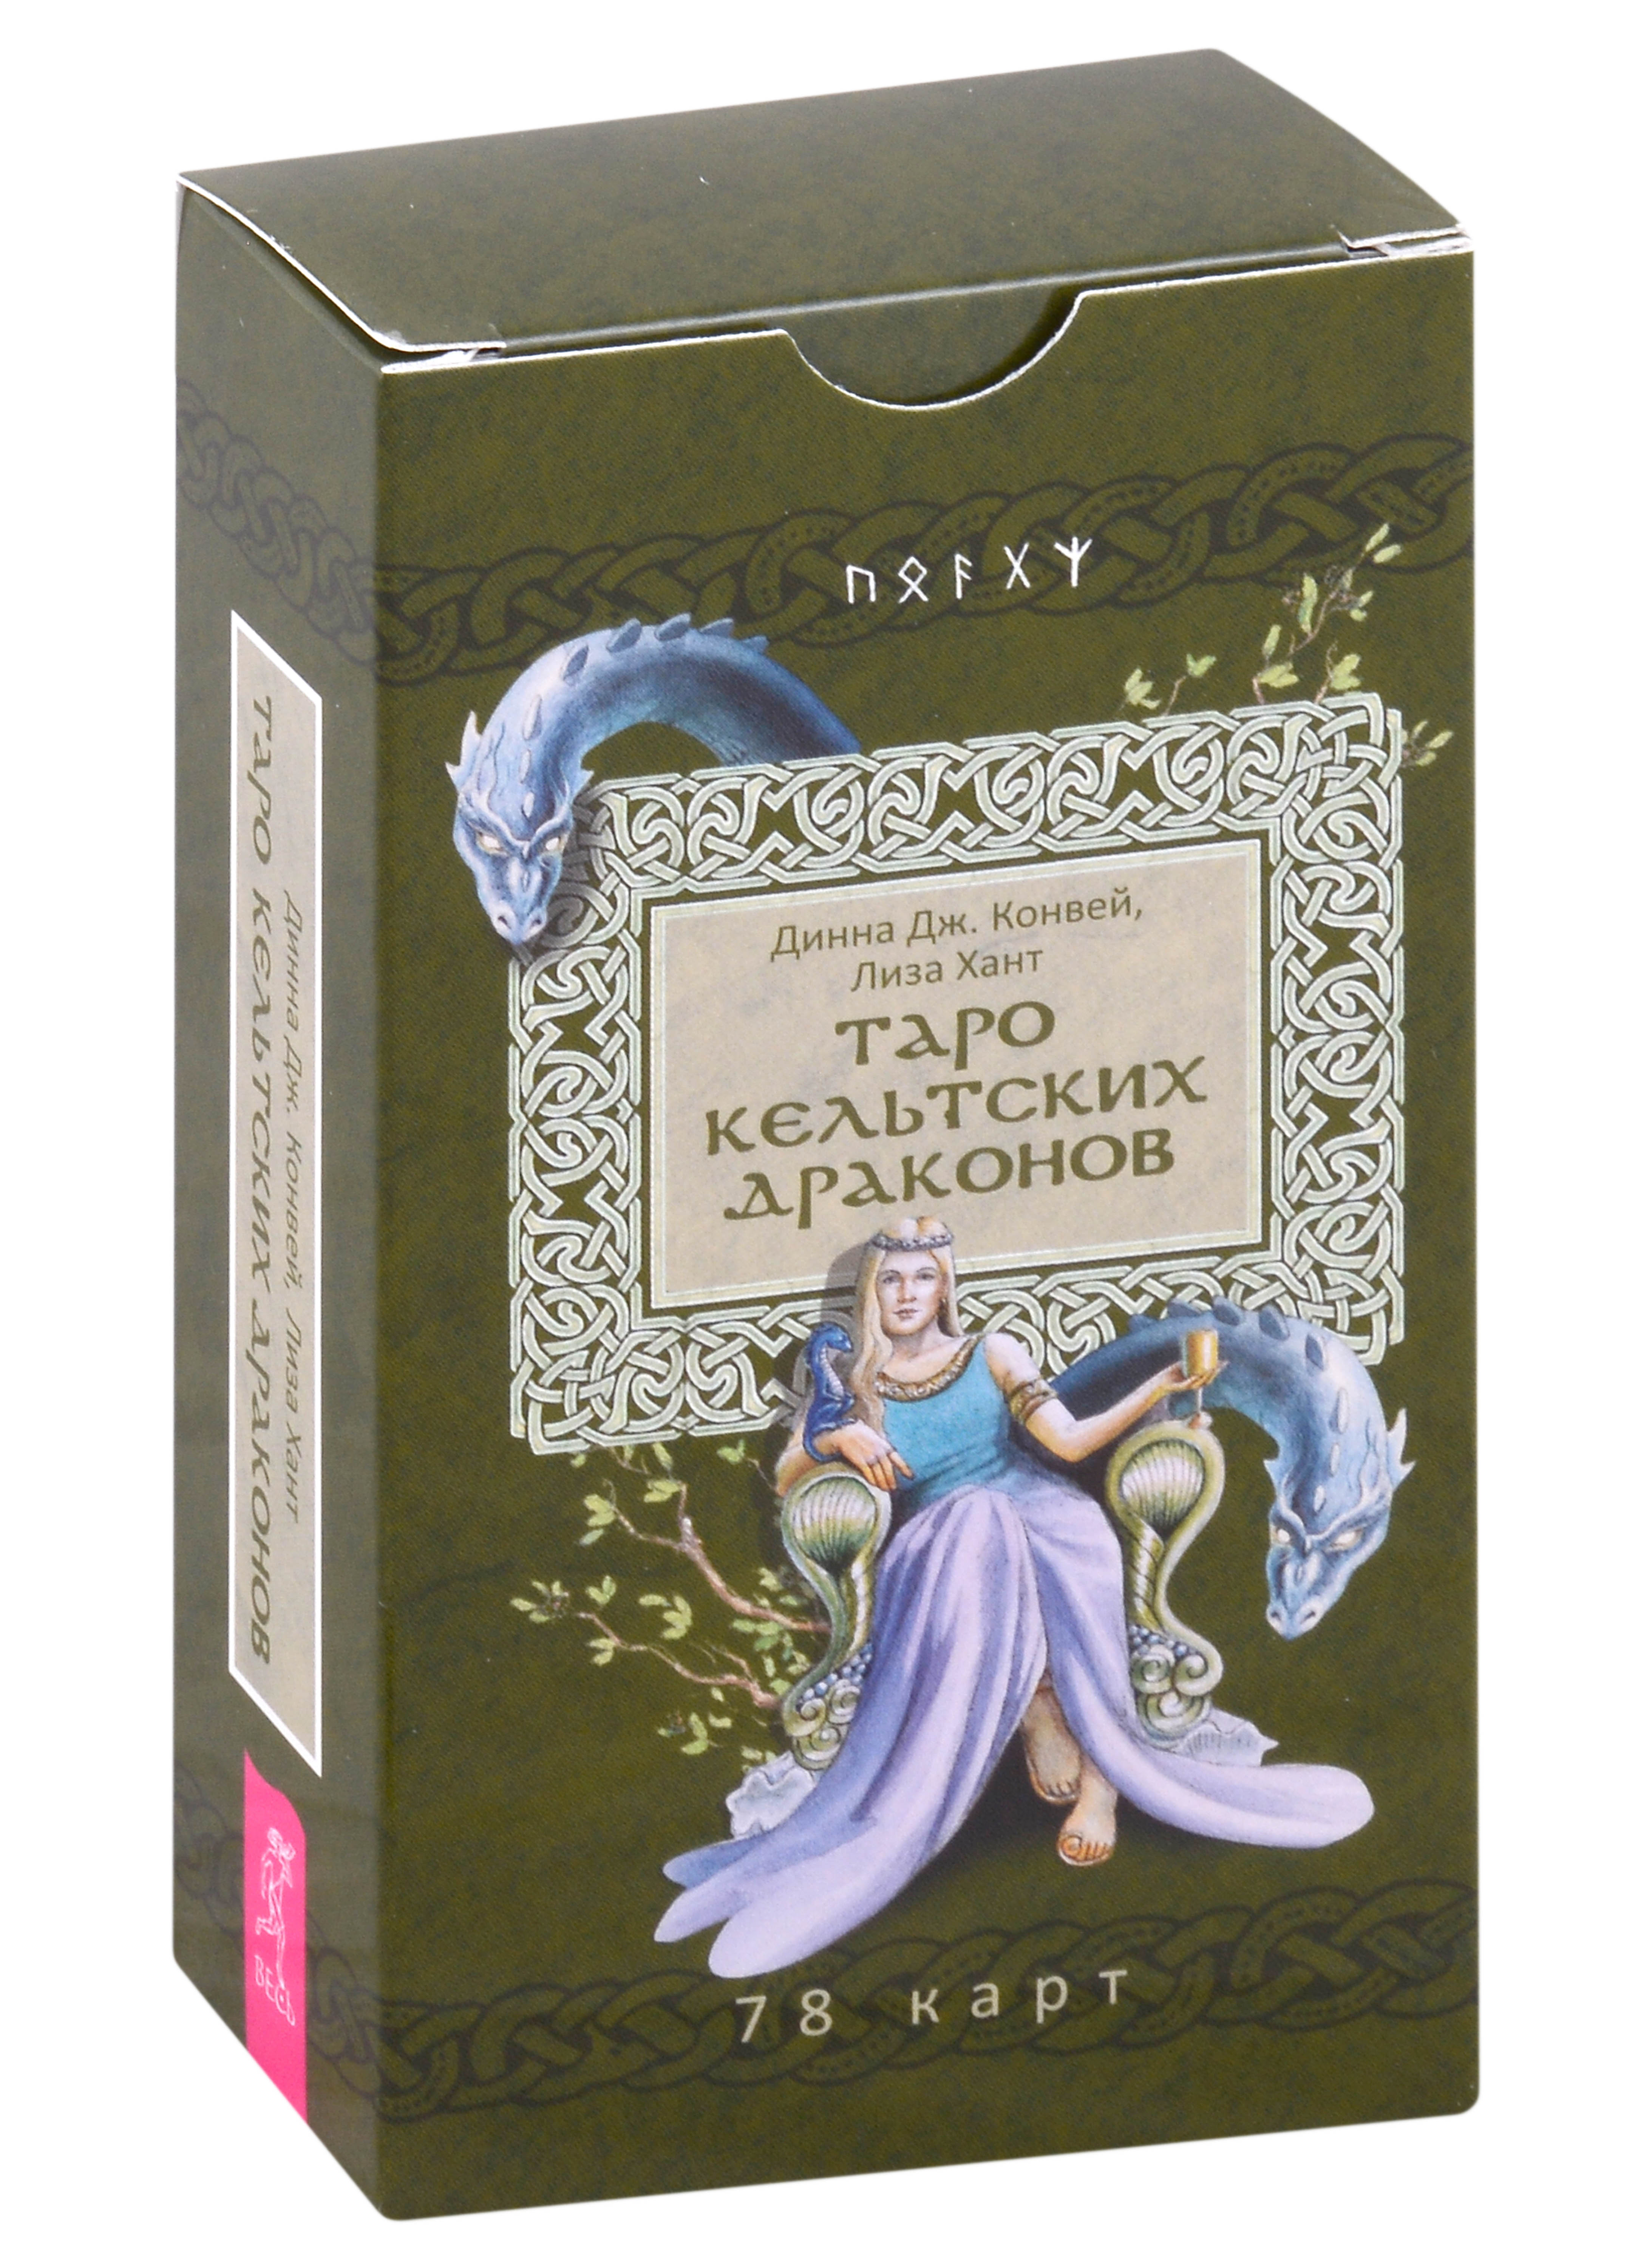 Конвей Динна Дж., Хант Лиза Таро кельтских драконов (78 карт) коральдо манфреди таро драконов